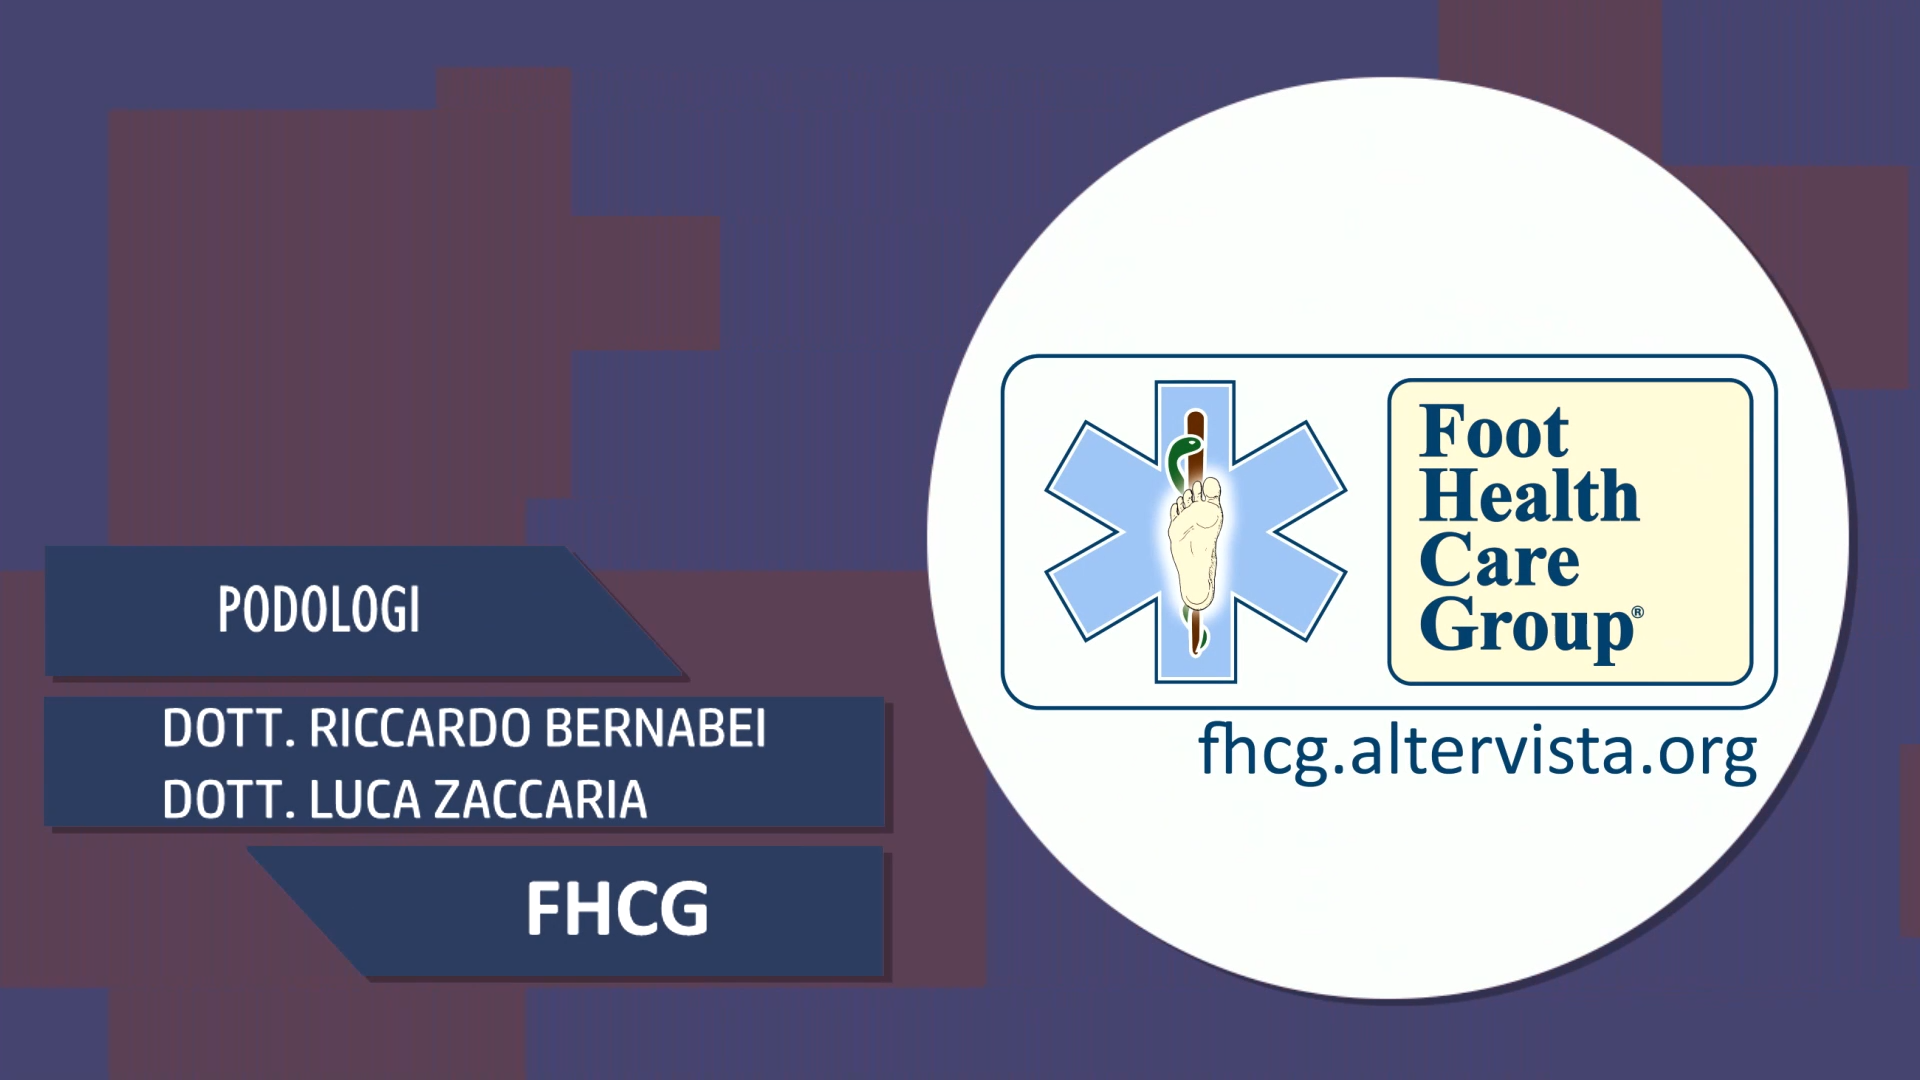 Intervista al Dott. Riccardo Bernabei e al Dott. Luca Zaccaria – FHCG